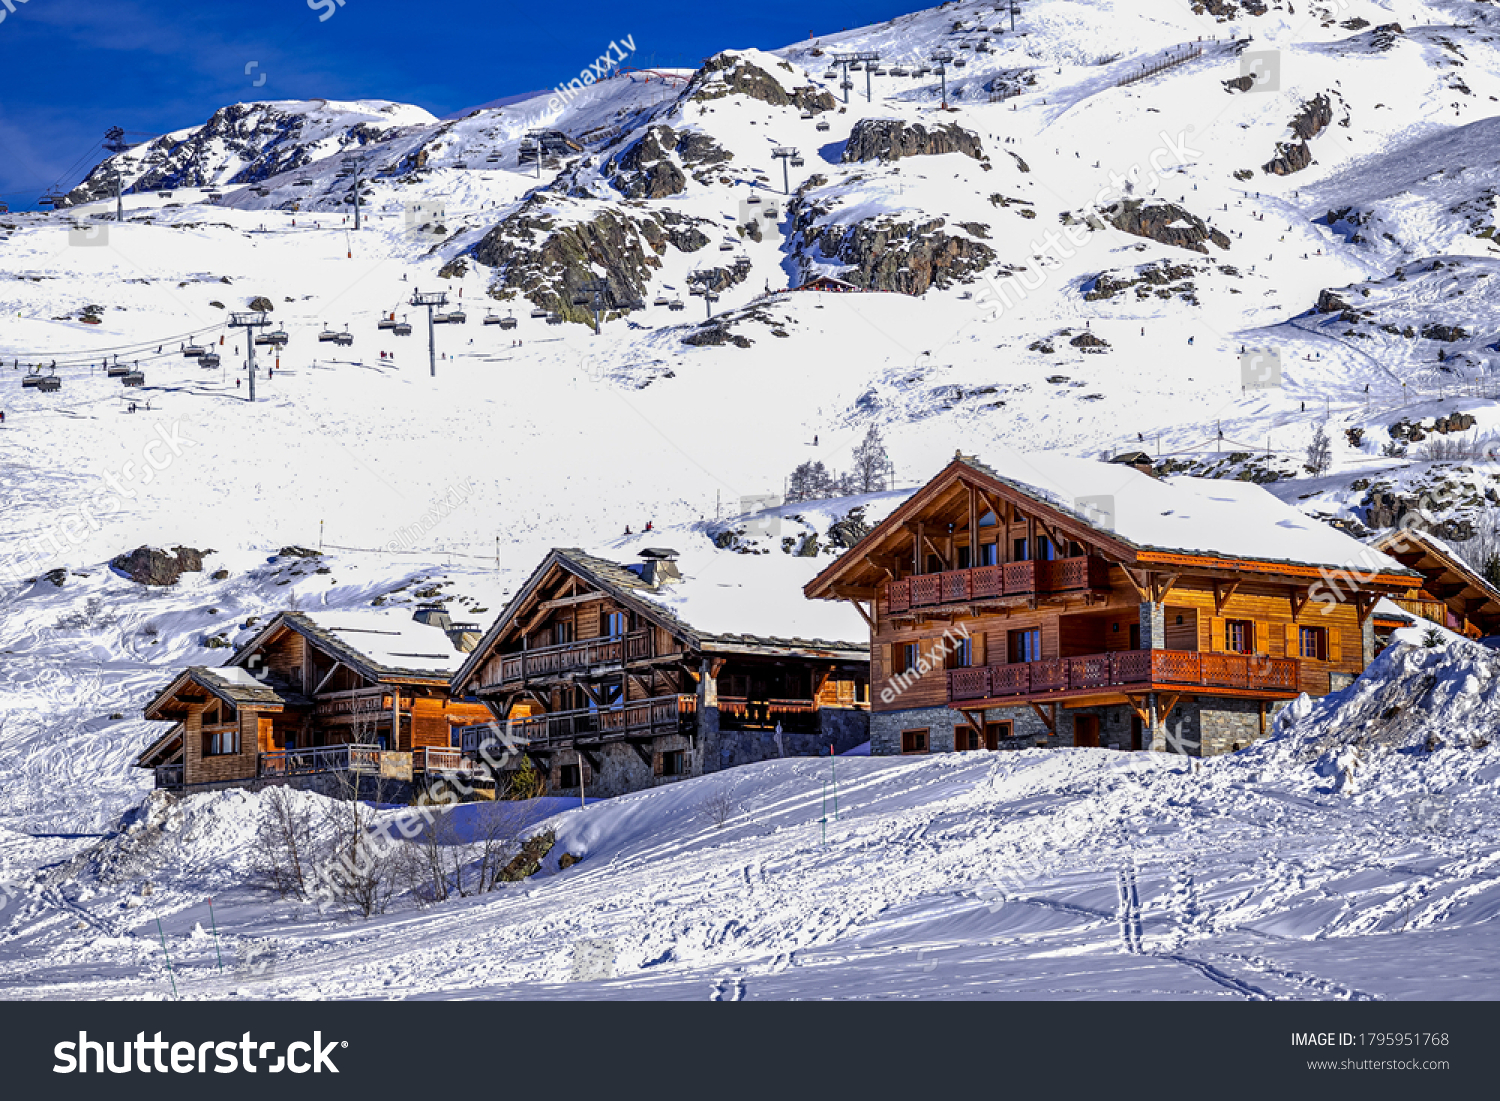 L'Alpe D'Huez ski resort in Alps mountains, France. Winter landscape. Famous travel destination. High quality photo